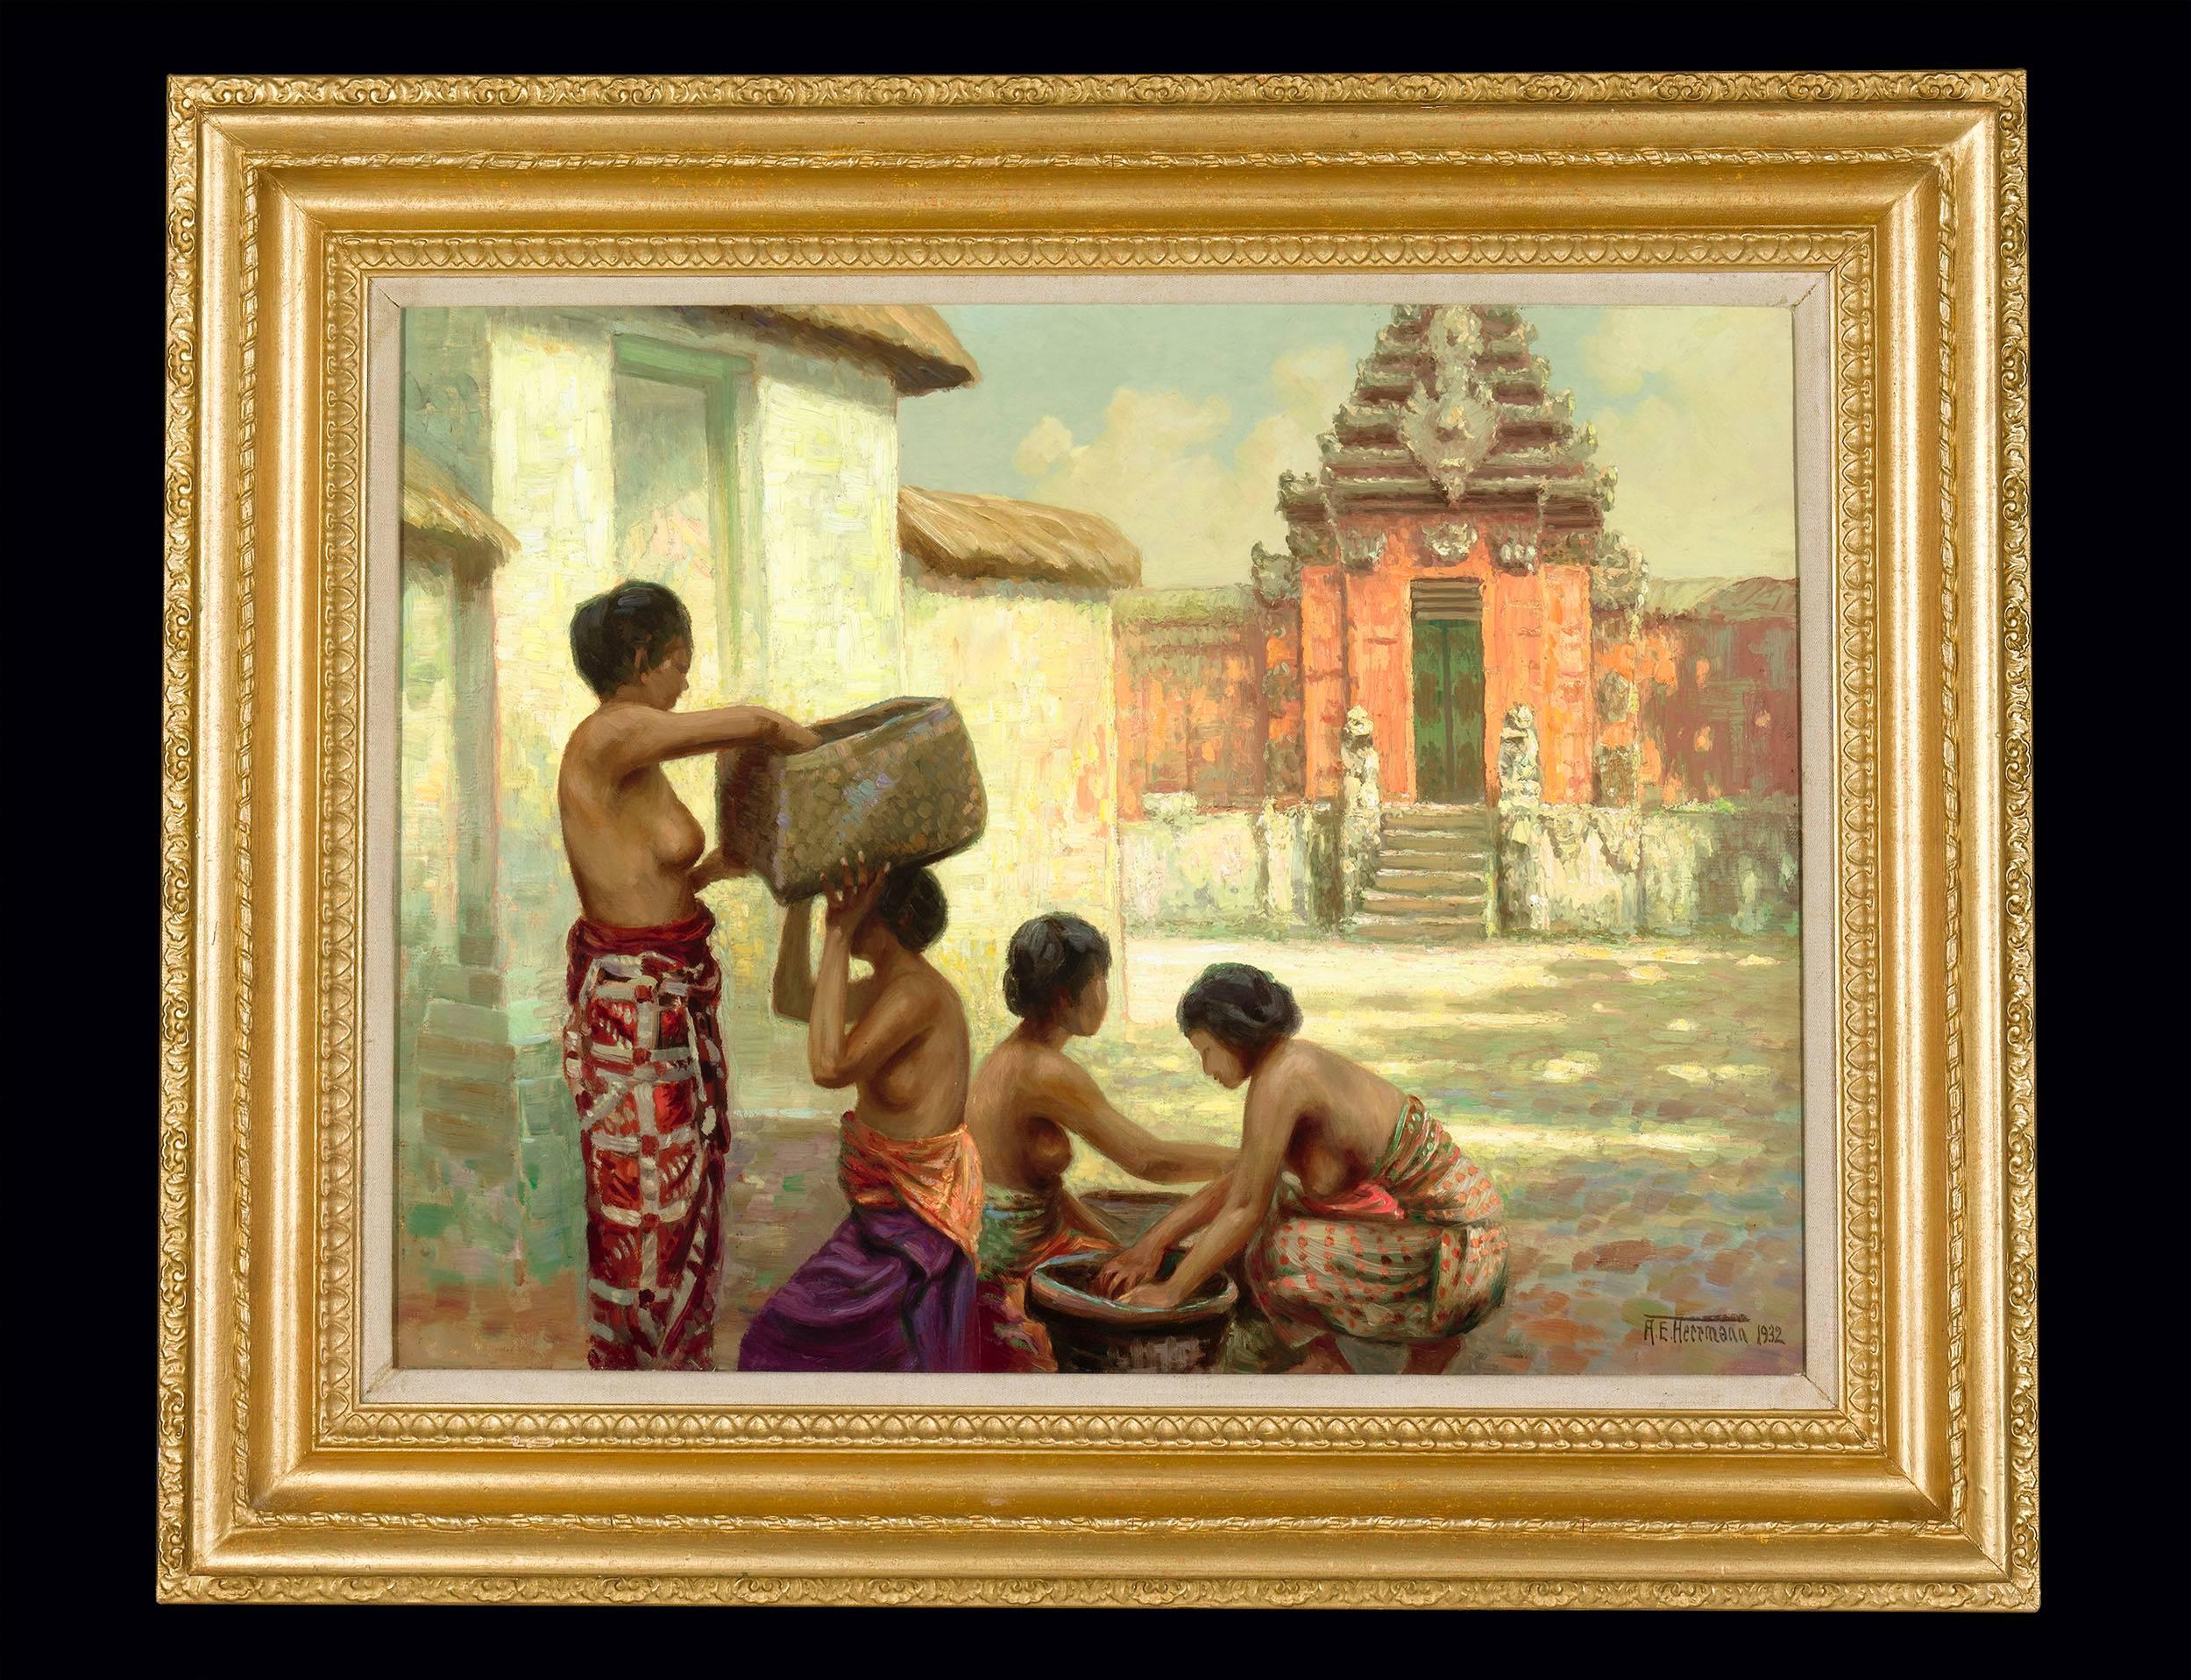 Bali by A. E. Herrmann - Painting by A.E. Herrmann